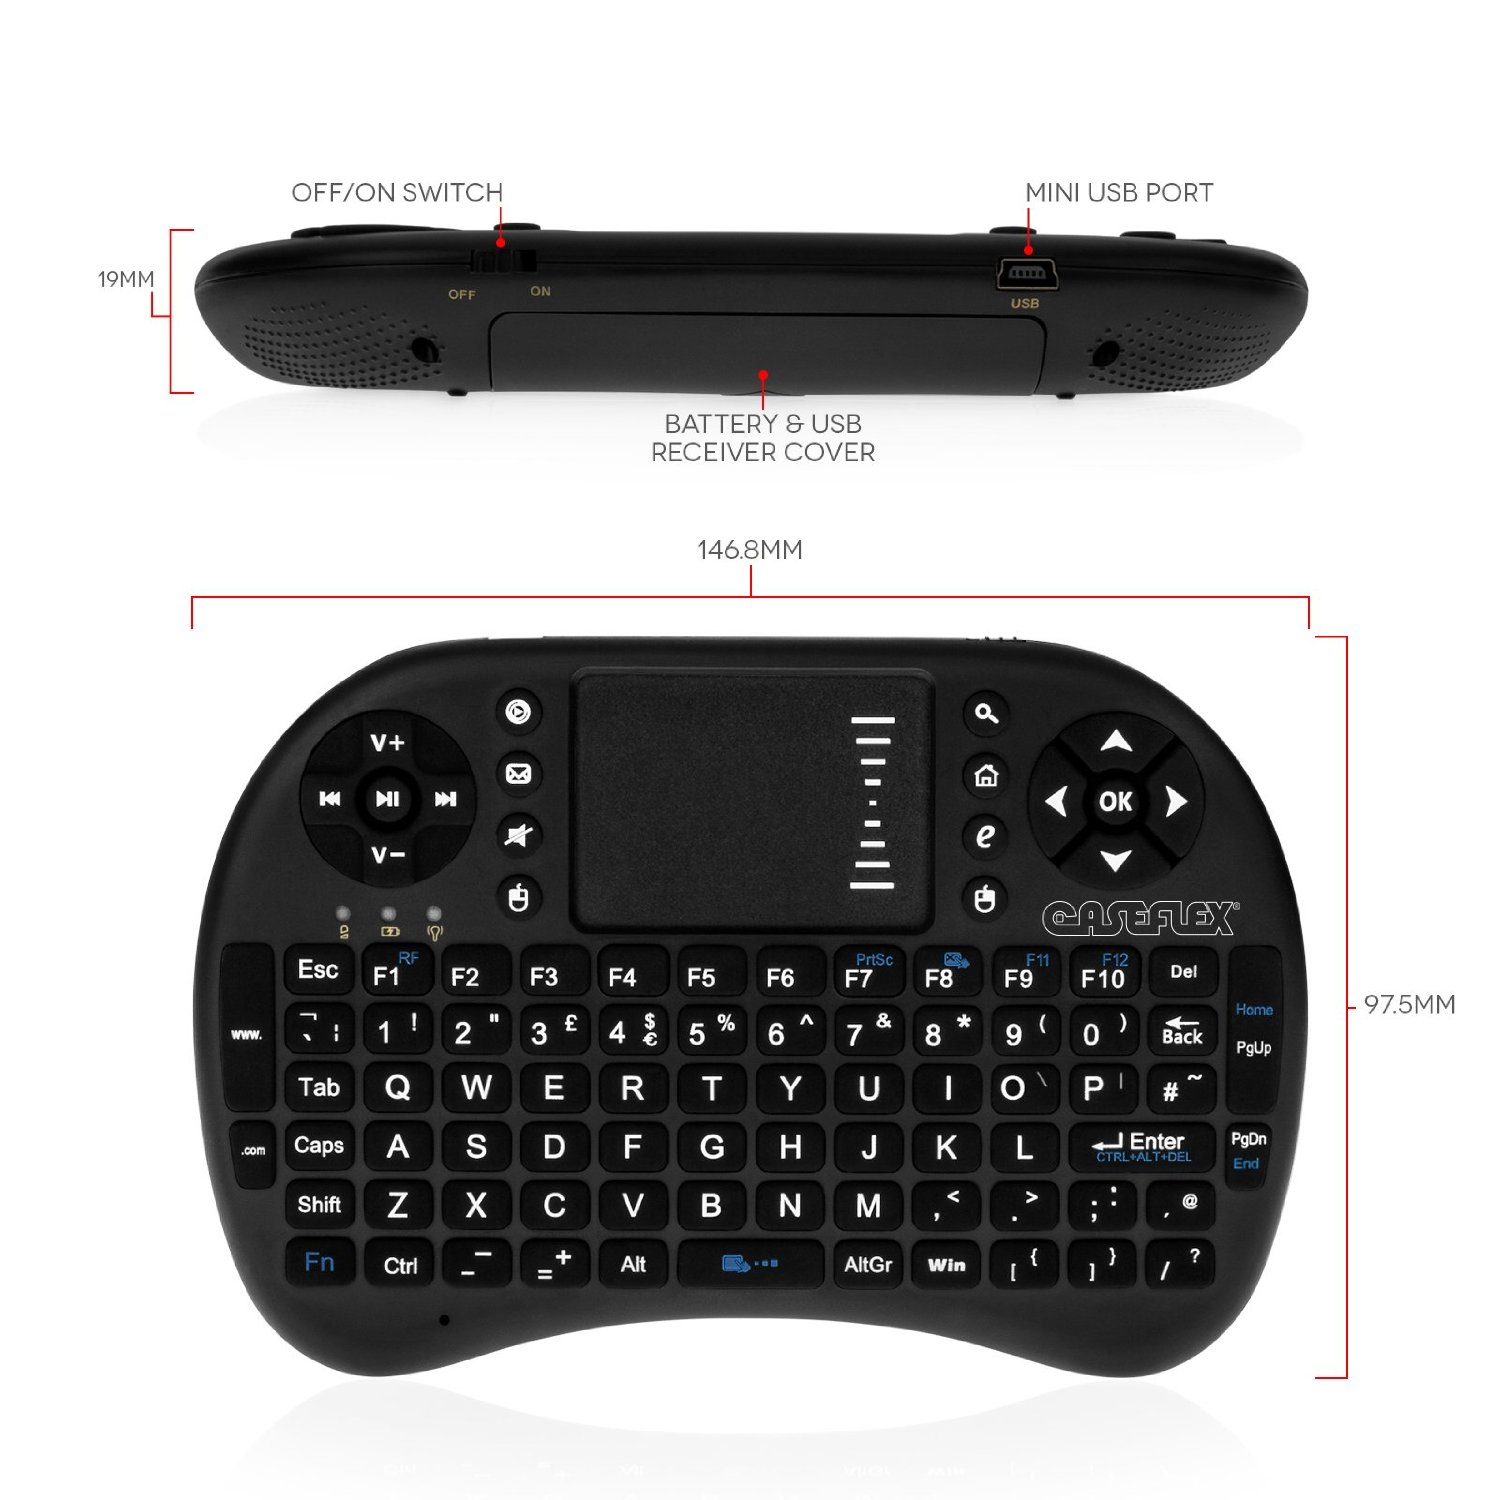 Caseflex 2.4Ghz Mini Wireless Keyboard (UK Version) - Black